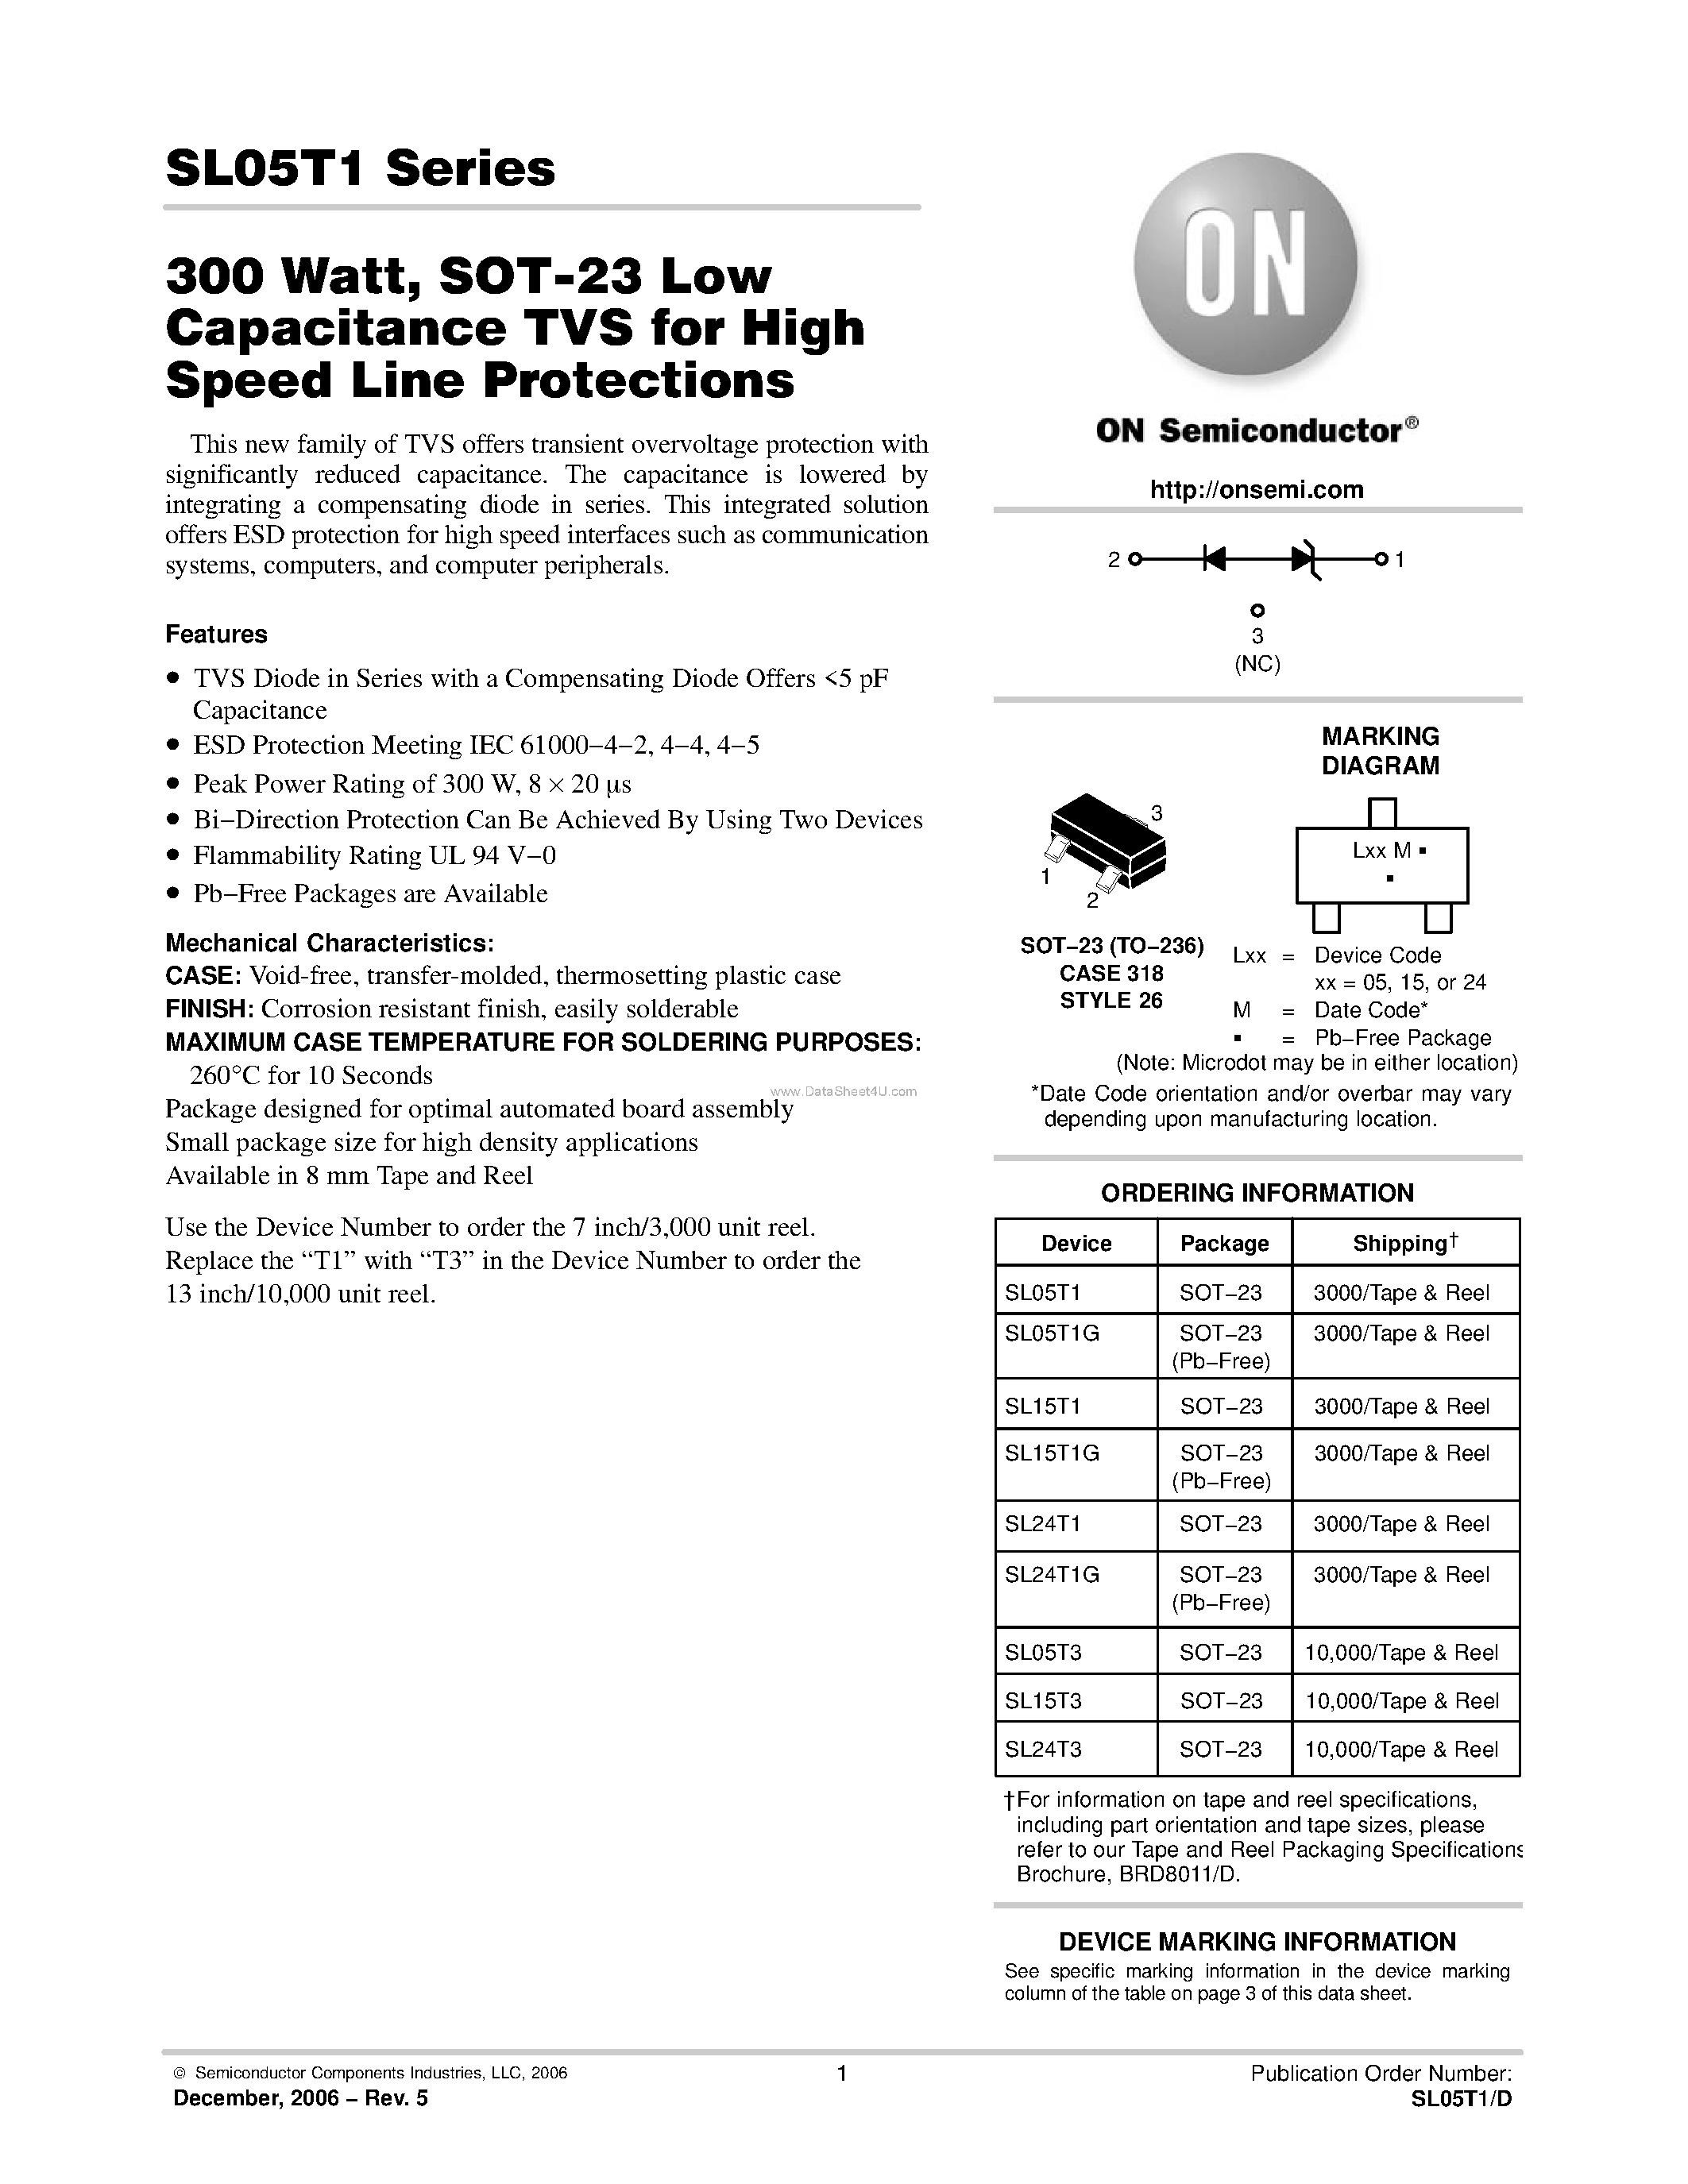 Даташит SL15T1 - SOT-23 Low Capacitance TVS страница 1